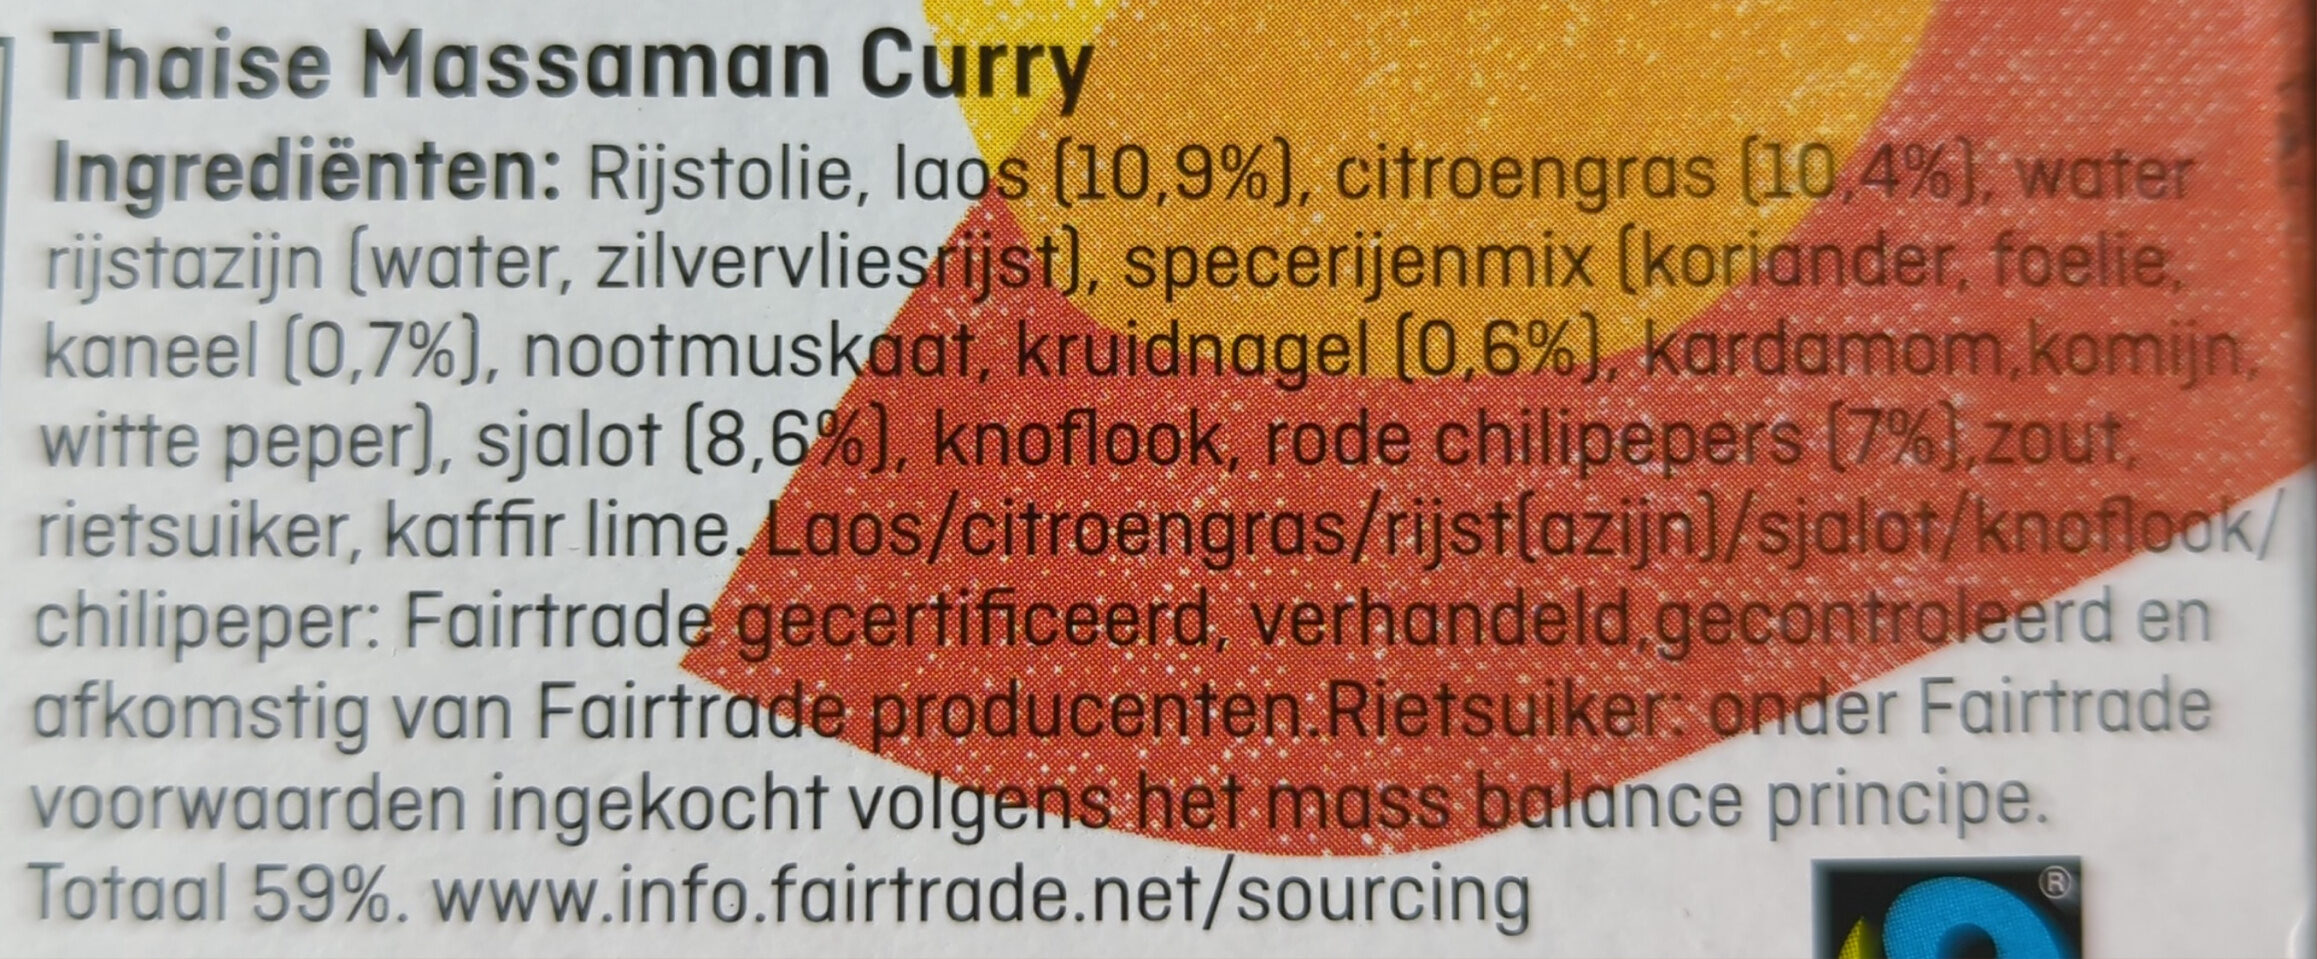 Thaise Massaman Curry - Ingrediënten